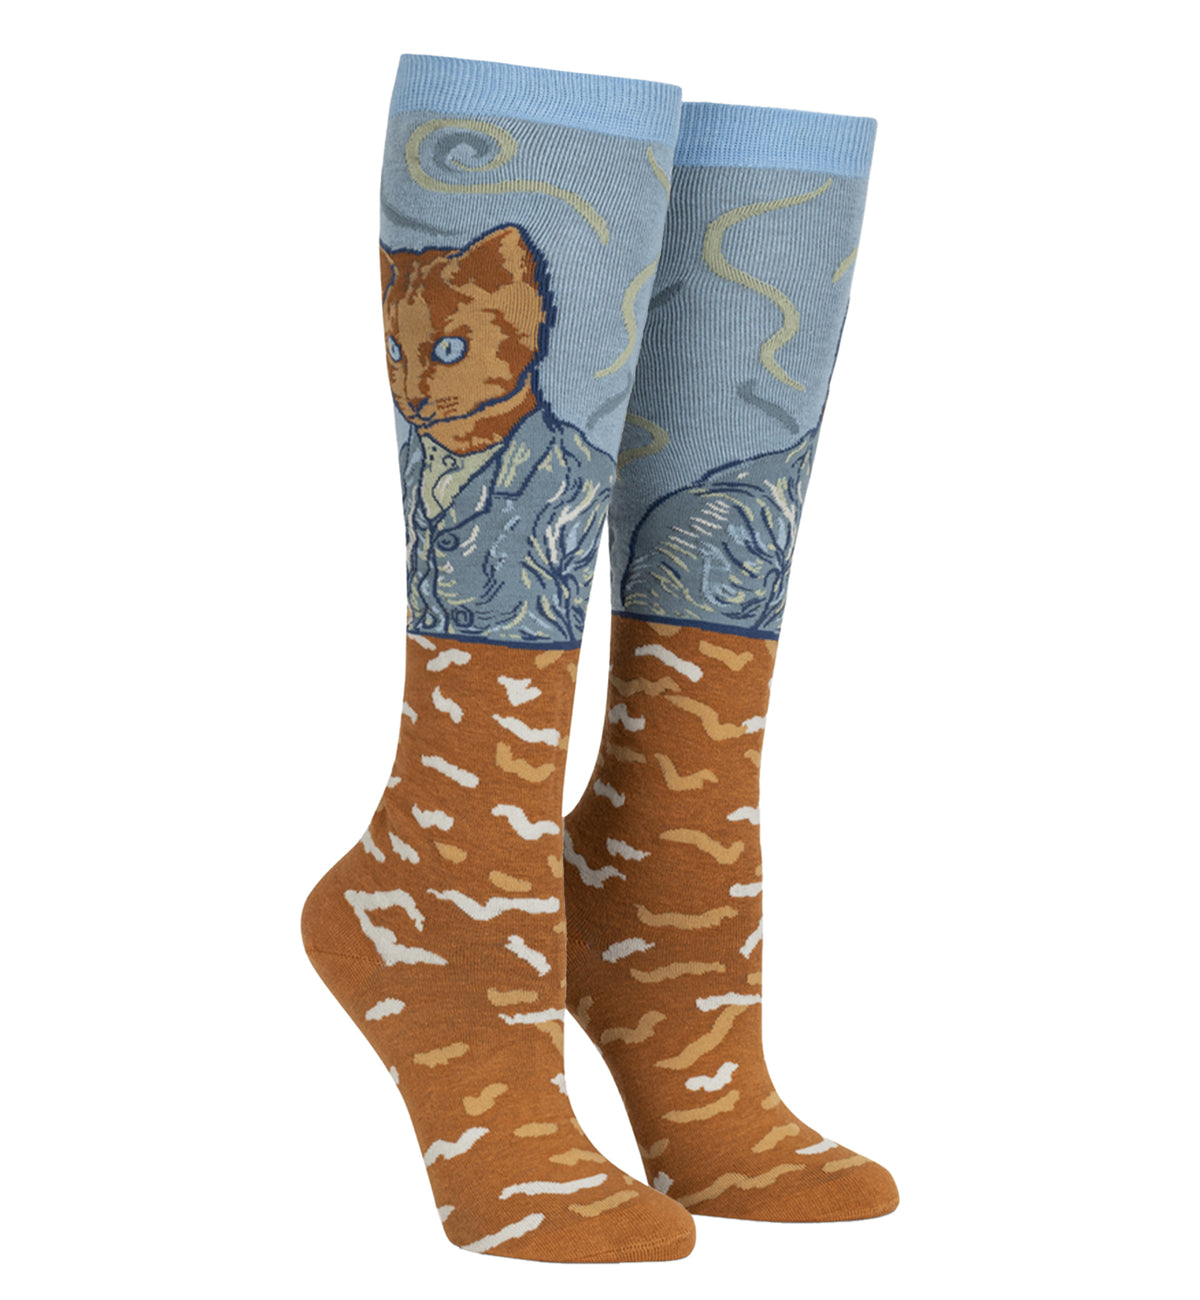 SOCK it to me Unisex Knee High Socks (F0632),Cat Van Gogh, A Selfie Portrait - Cat Van Gogh A Selfie Portrait,One Size